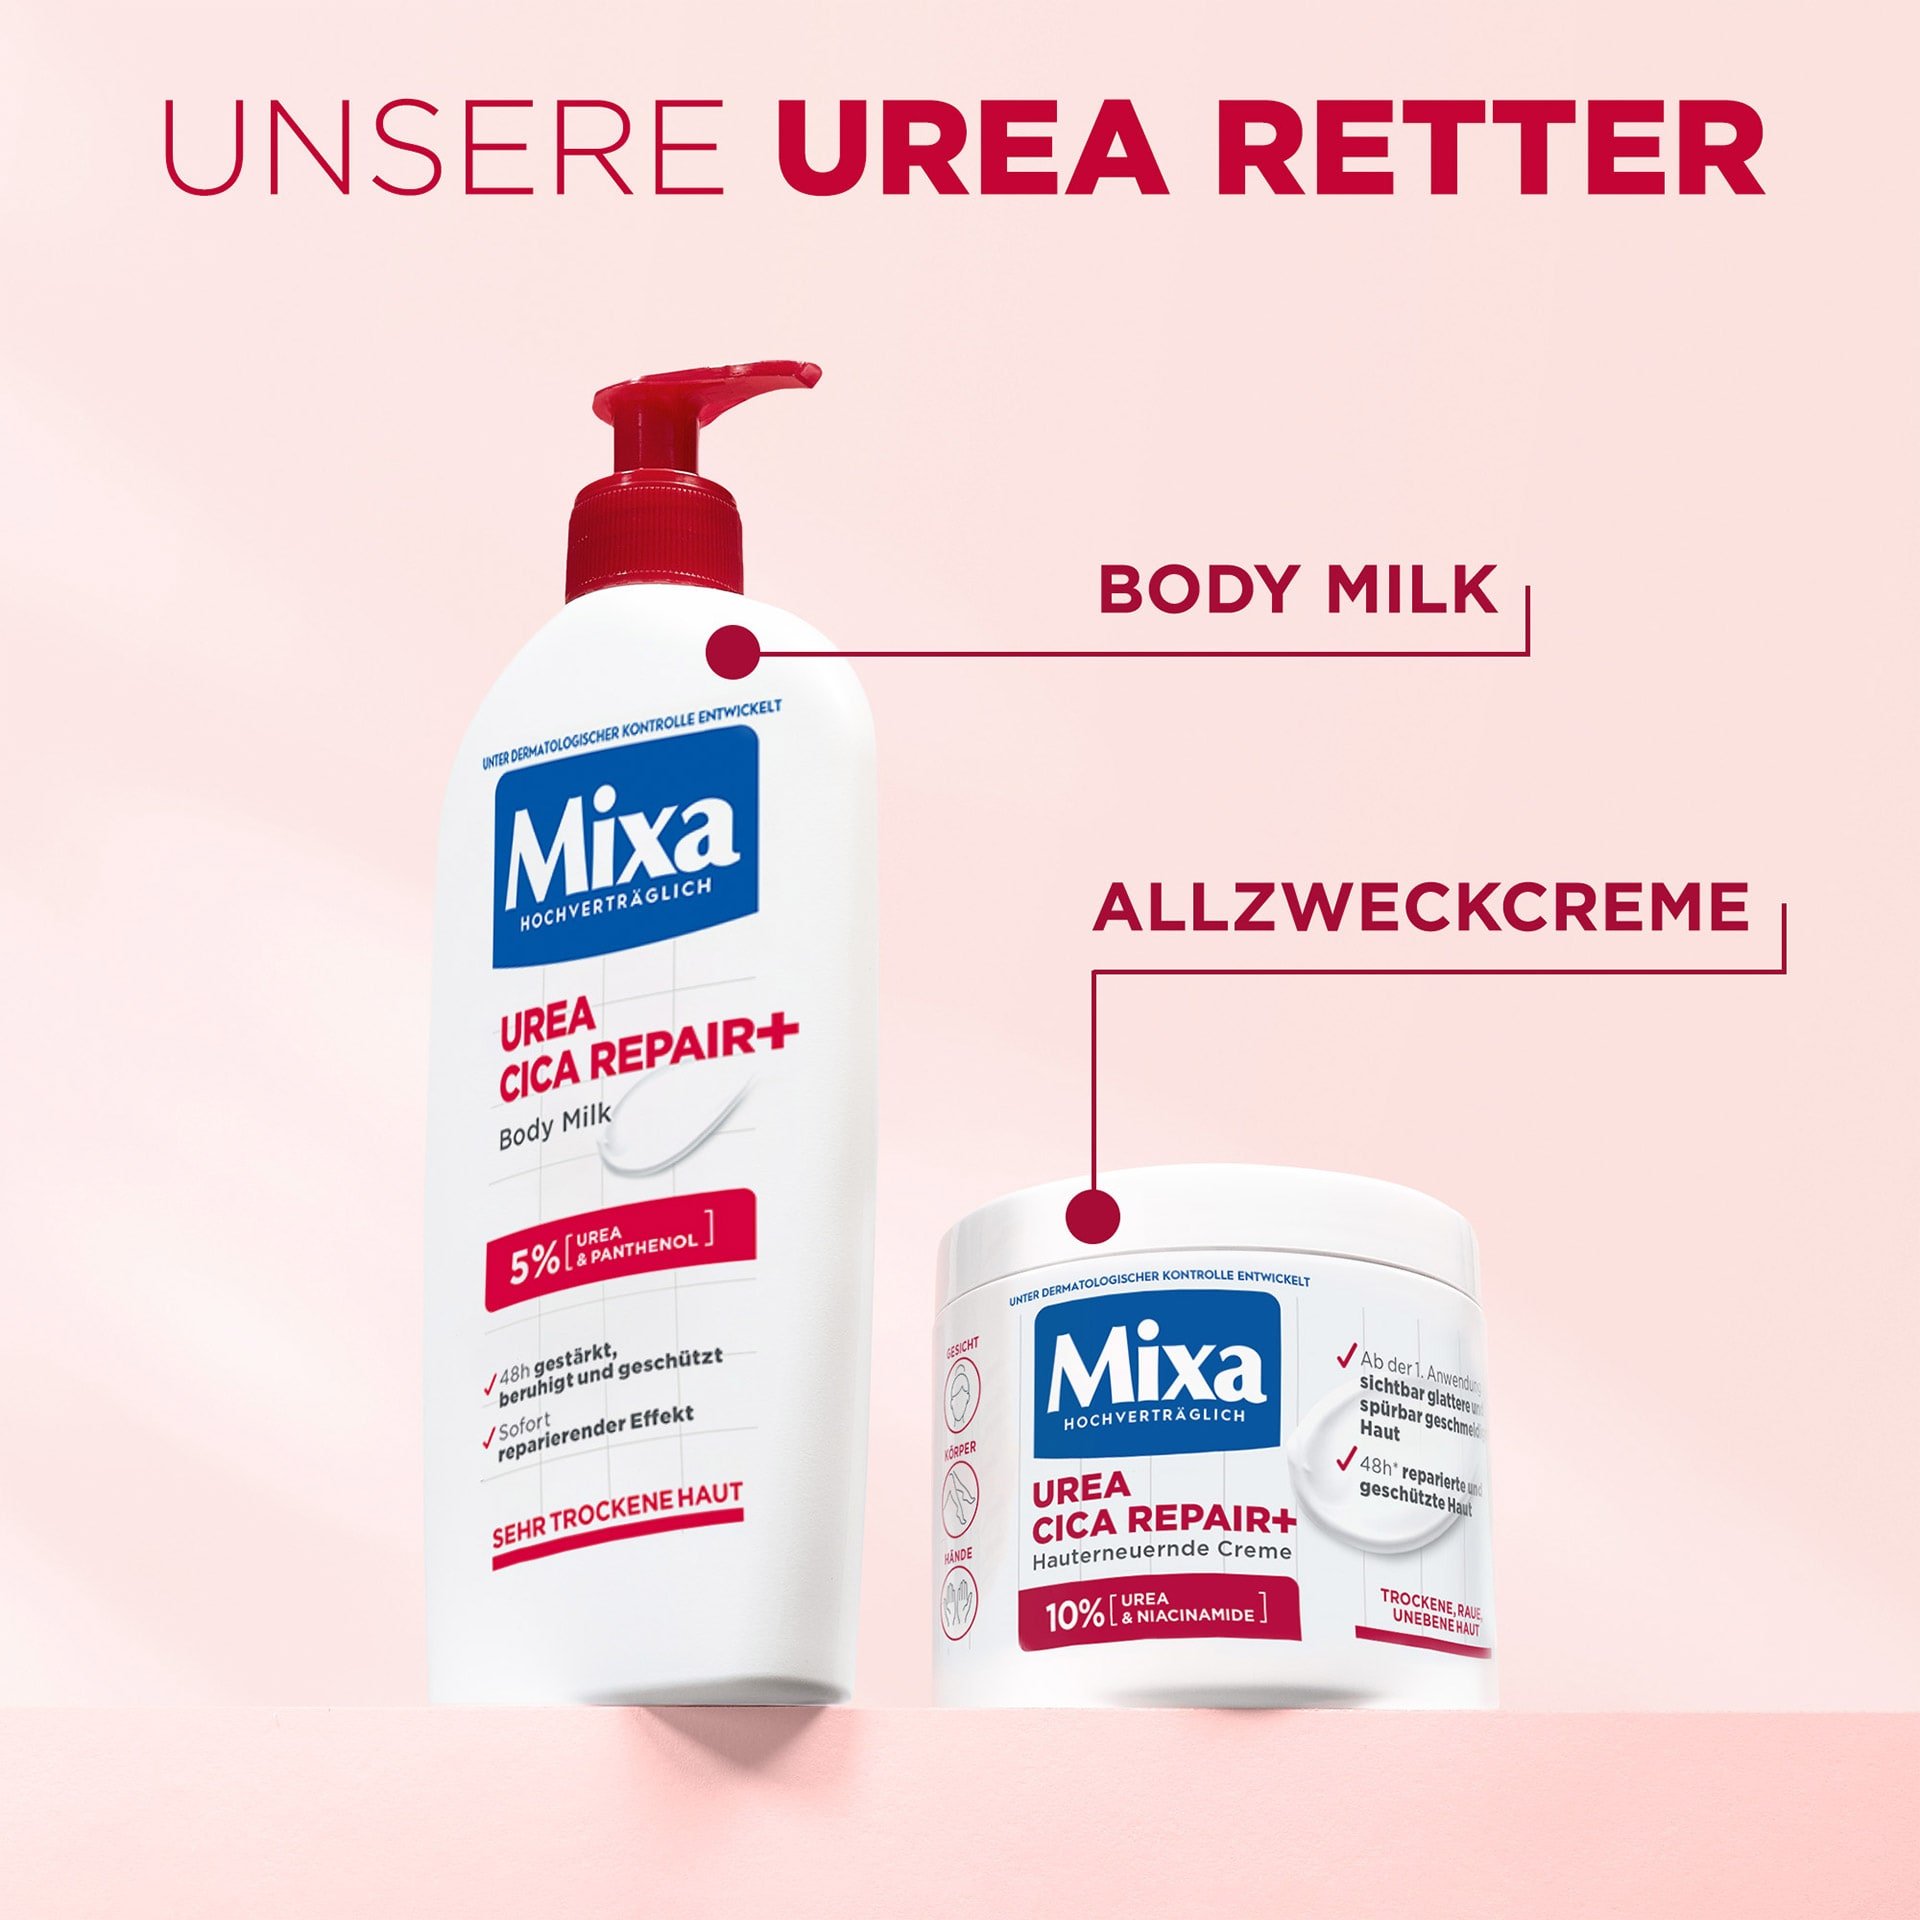 Urea Cica Repair+ Body Milk für sehr trockene Haut